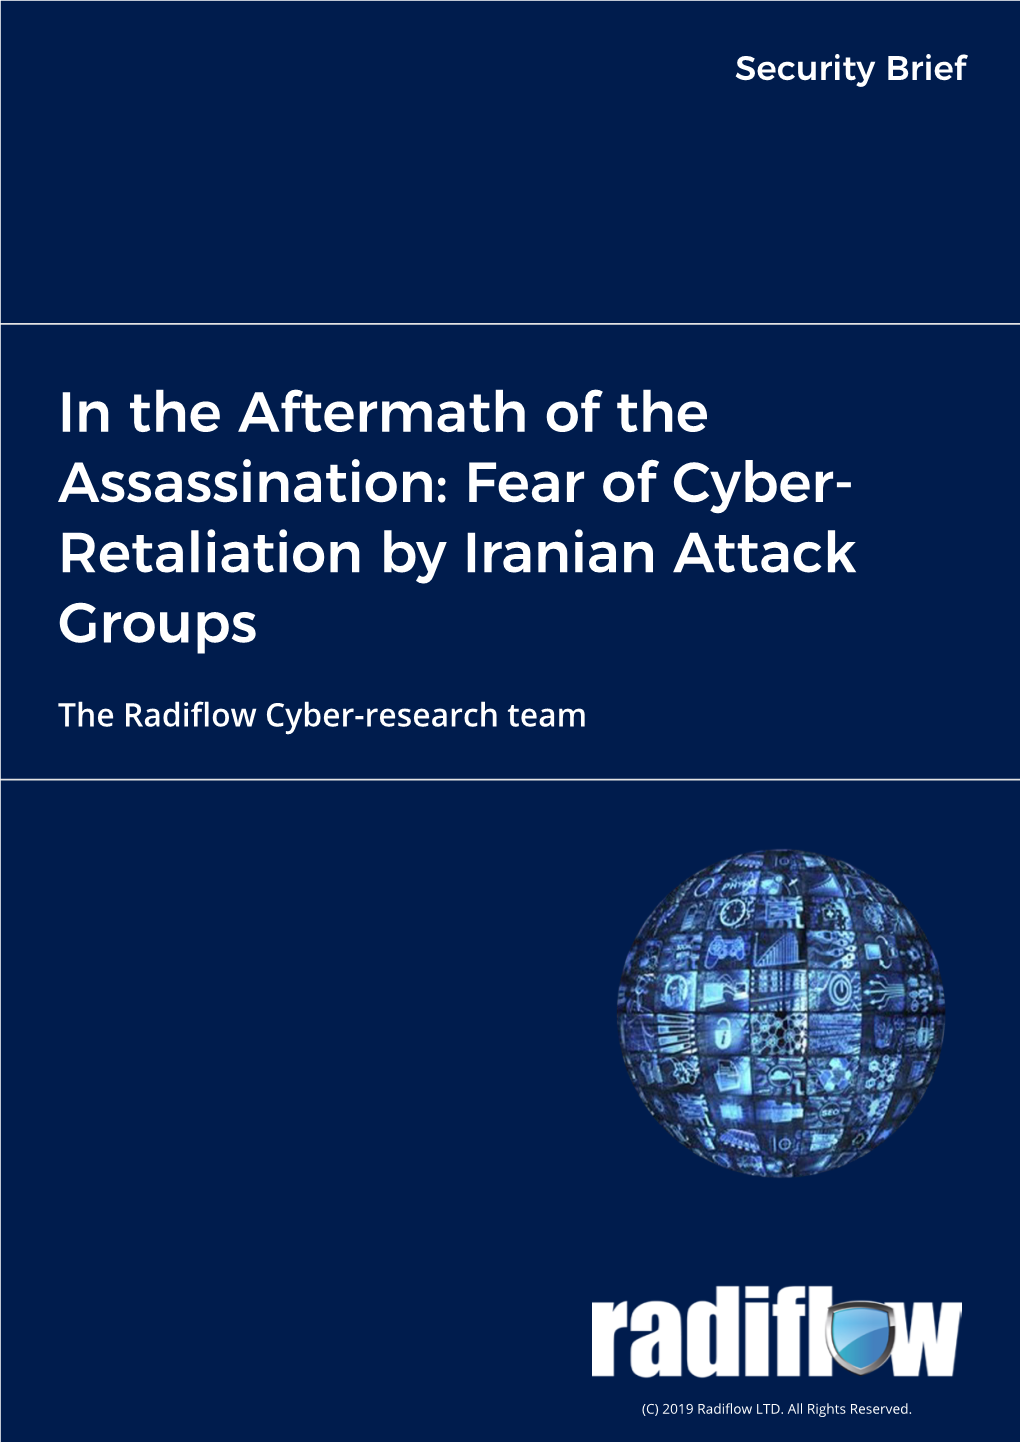 Retaliation by Iranian Attack Groups